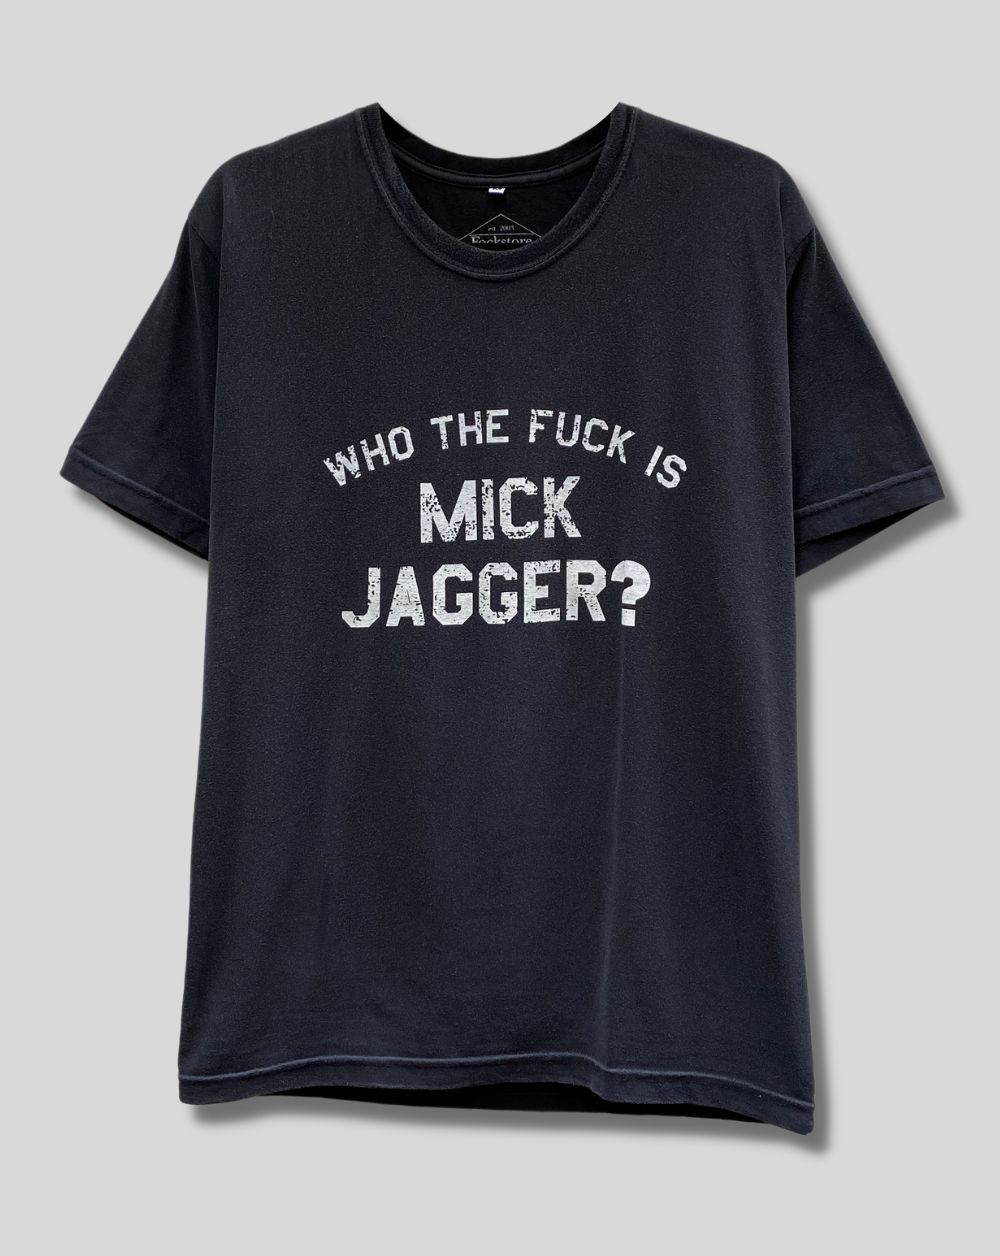 Camiseta Mick Jagger